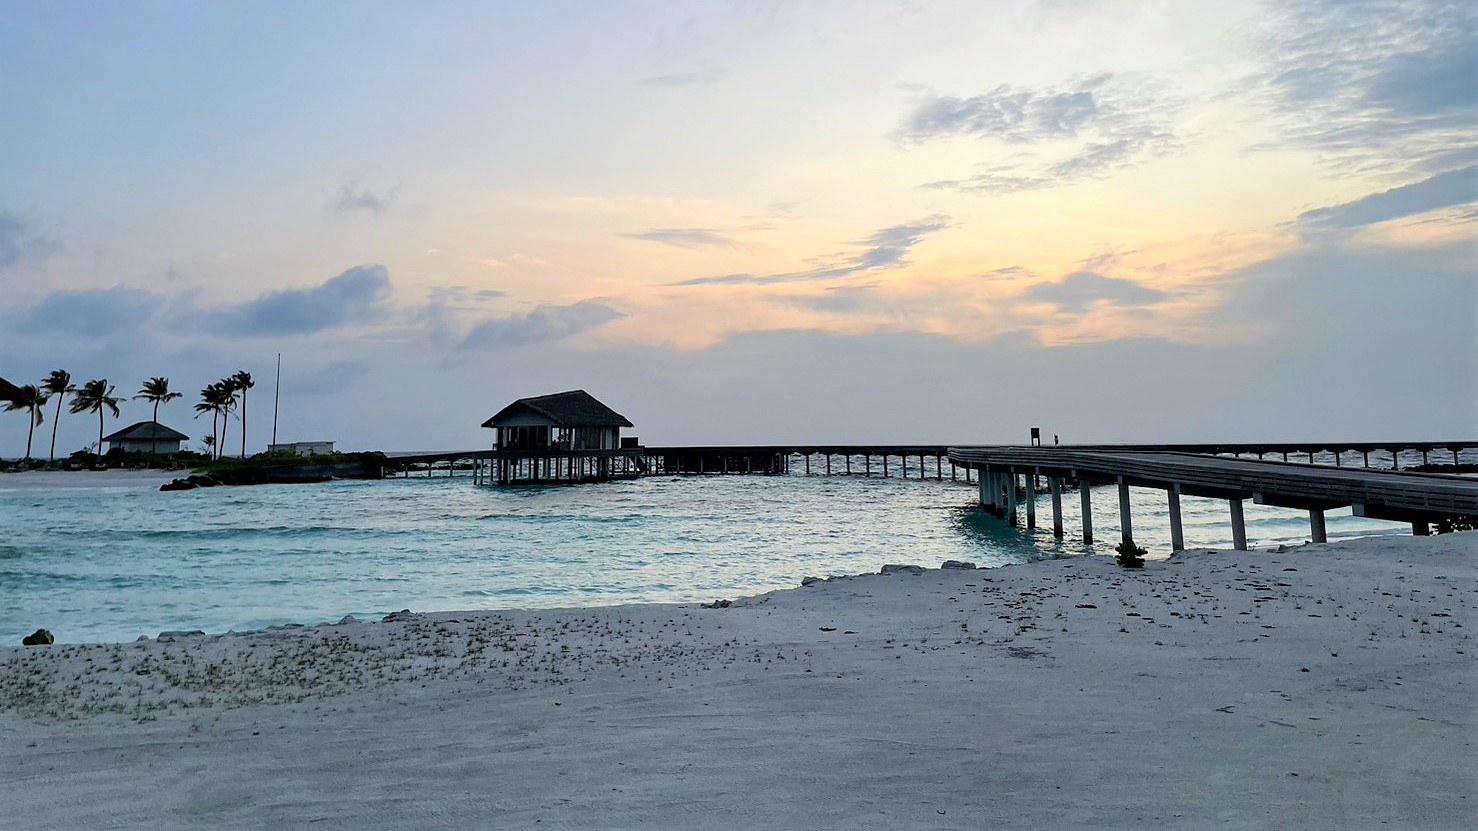 MALDIVES REVIEW|モルディブ お客様の声